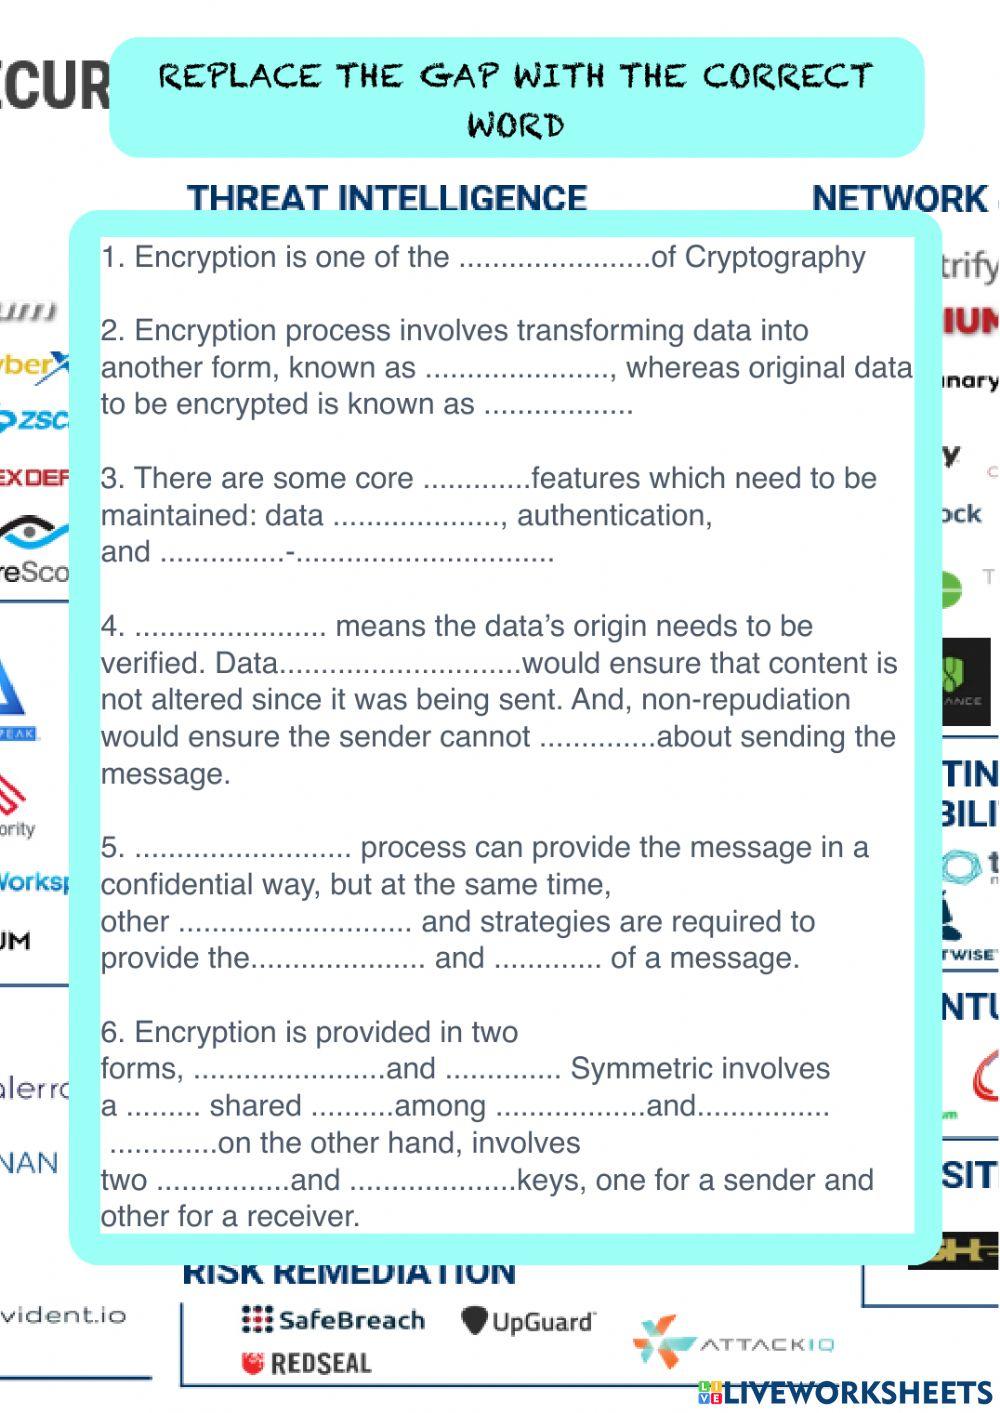 Encryption and decryption